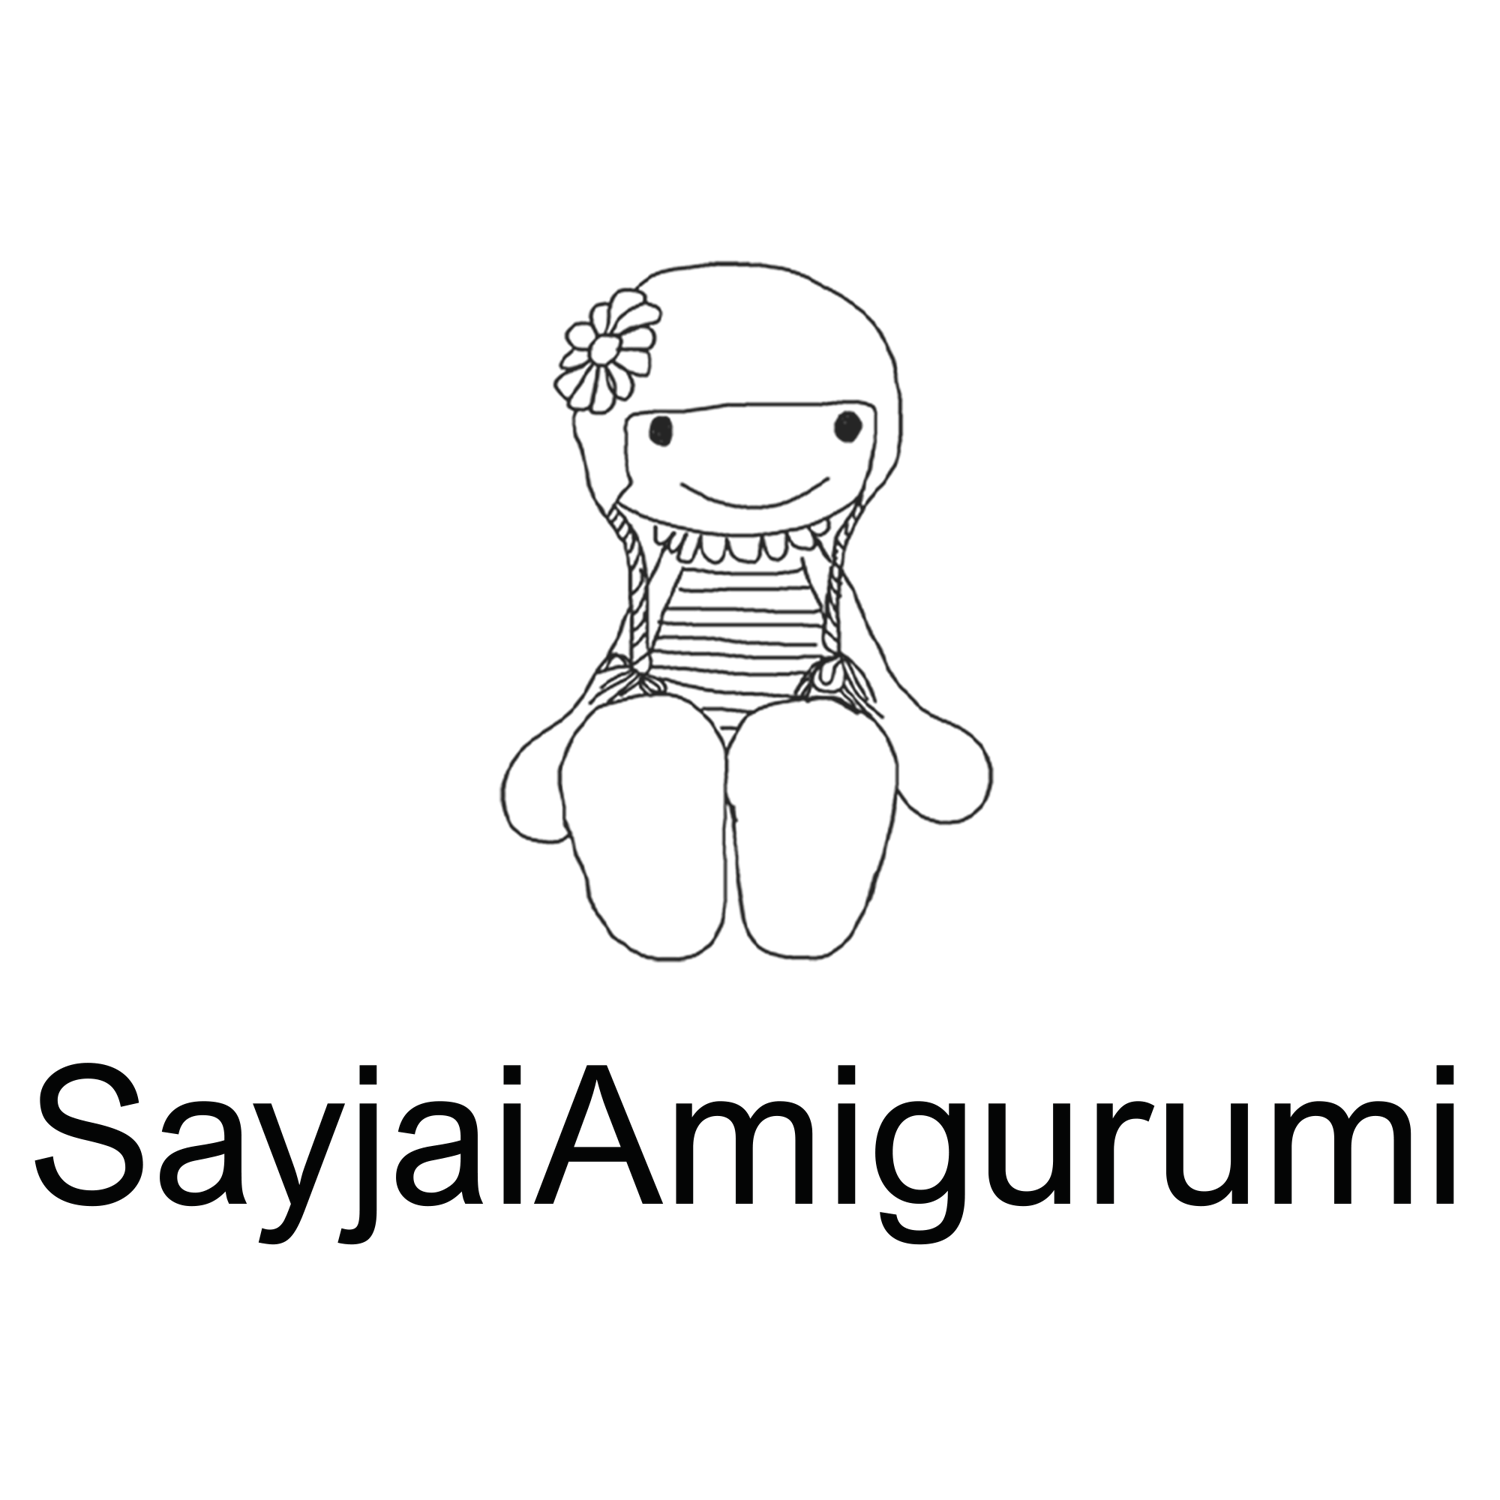 Sayjai Amigurumi logo